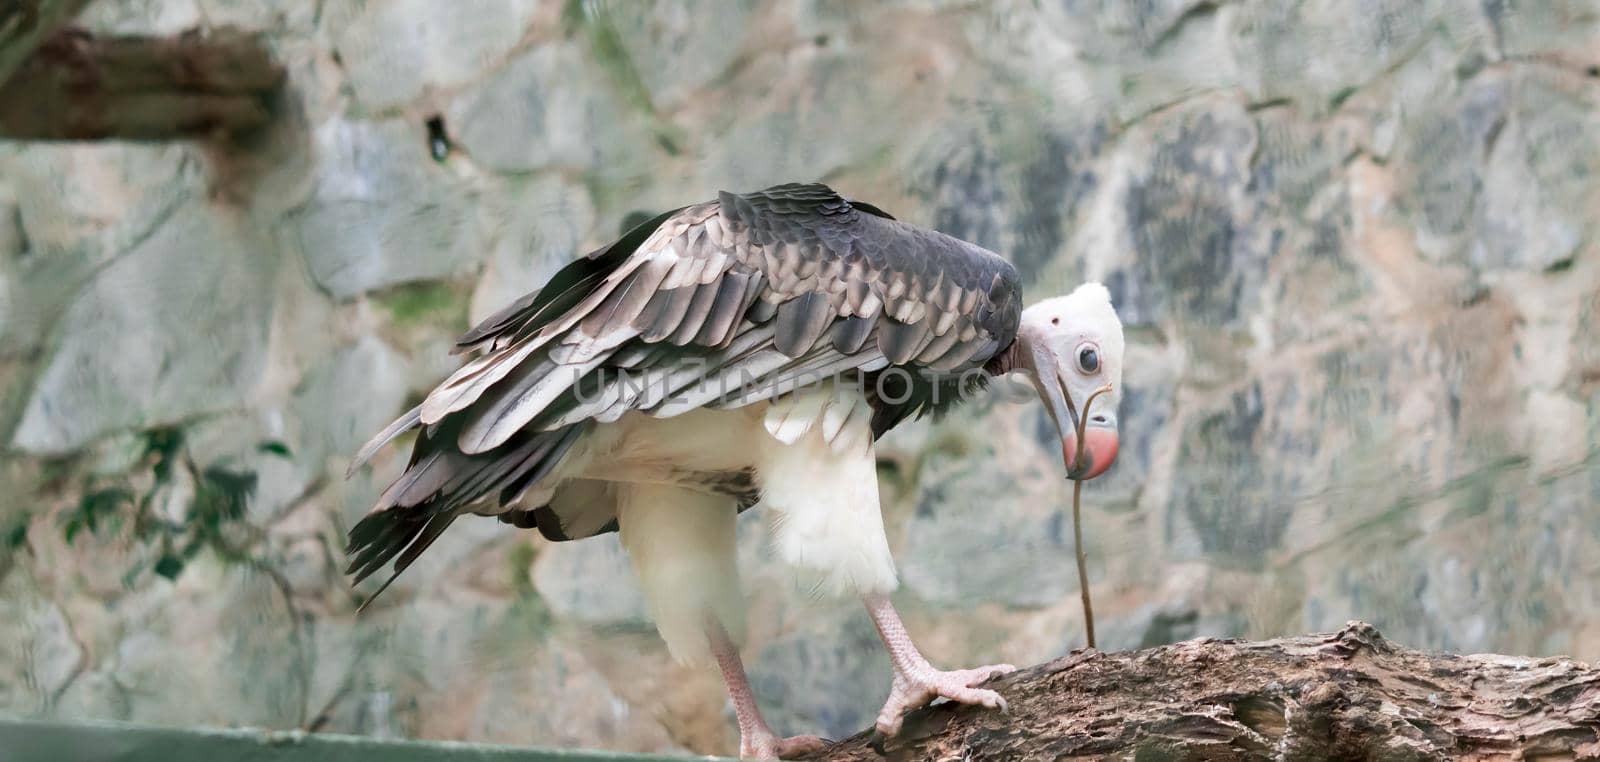 White-headed vulture (Trigonoceps occipitalis) by billroque